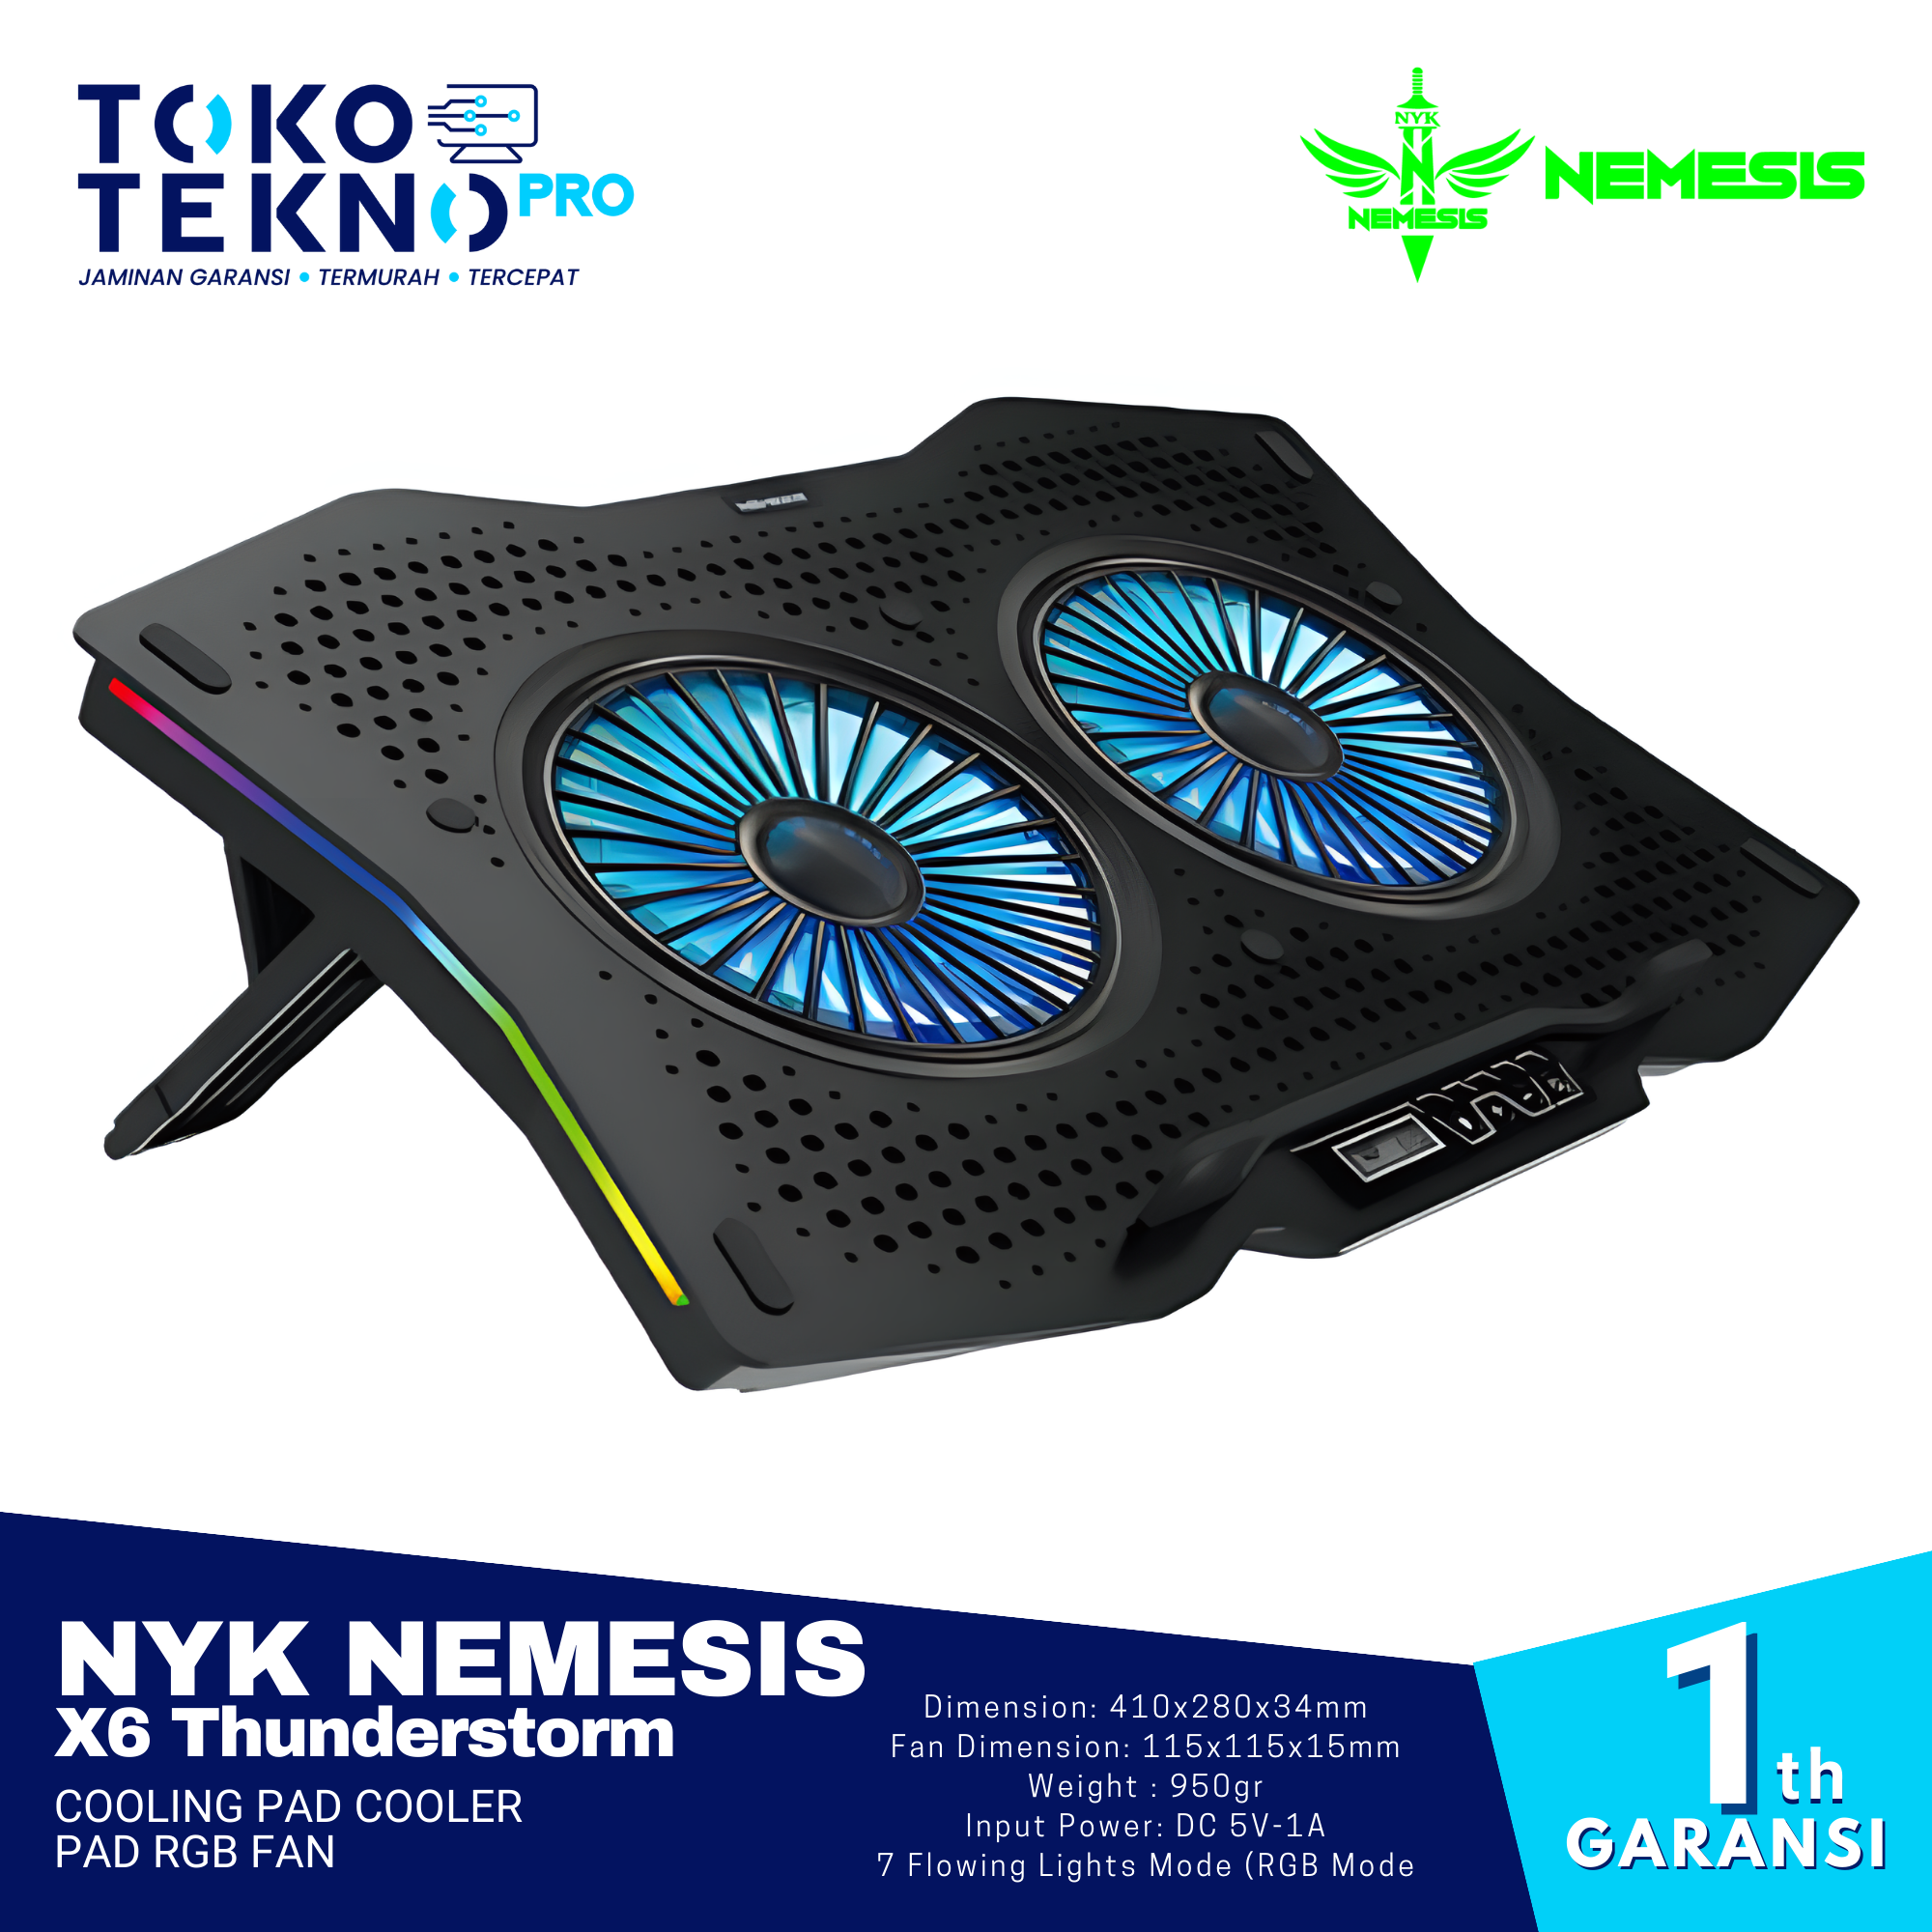 NYK Nemesis X6 Thunderstorm Cooling Pad Cooler Pad RGB Fan